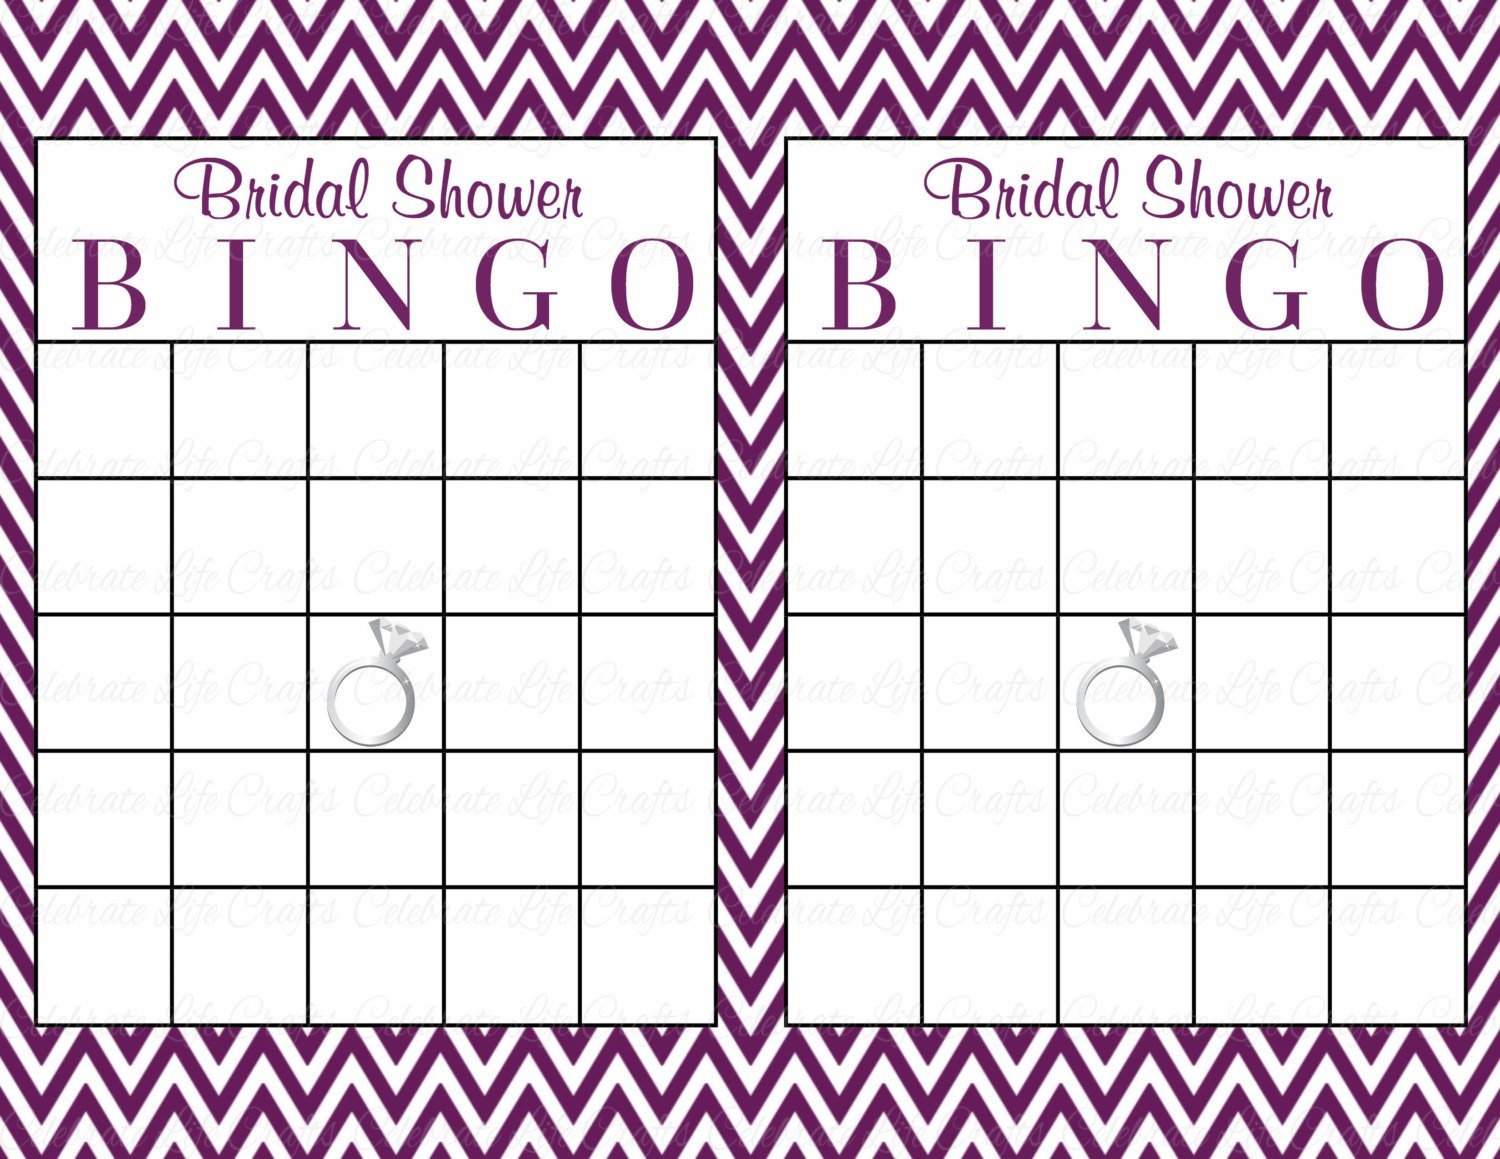 Bridal Bingo Free Template Blank 60 Bridal Bingo Cards Blank &amp; 60 Prefilled Cards Printable